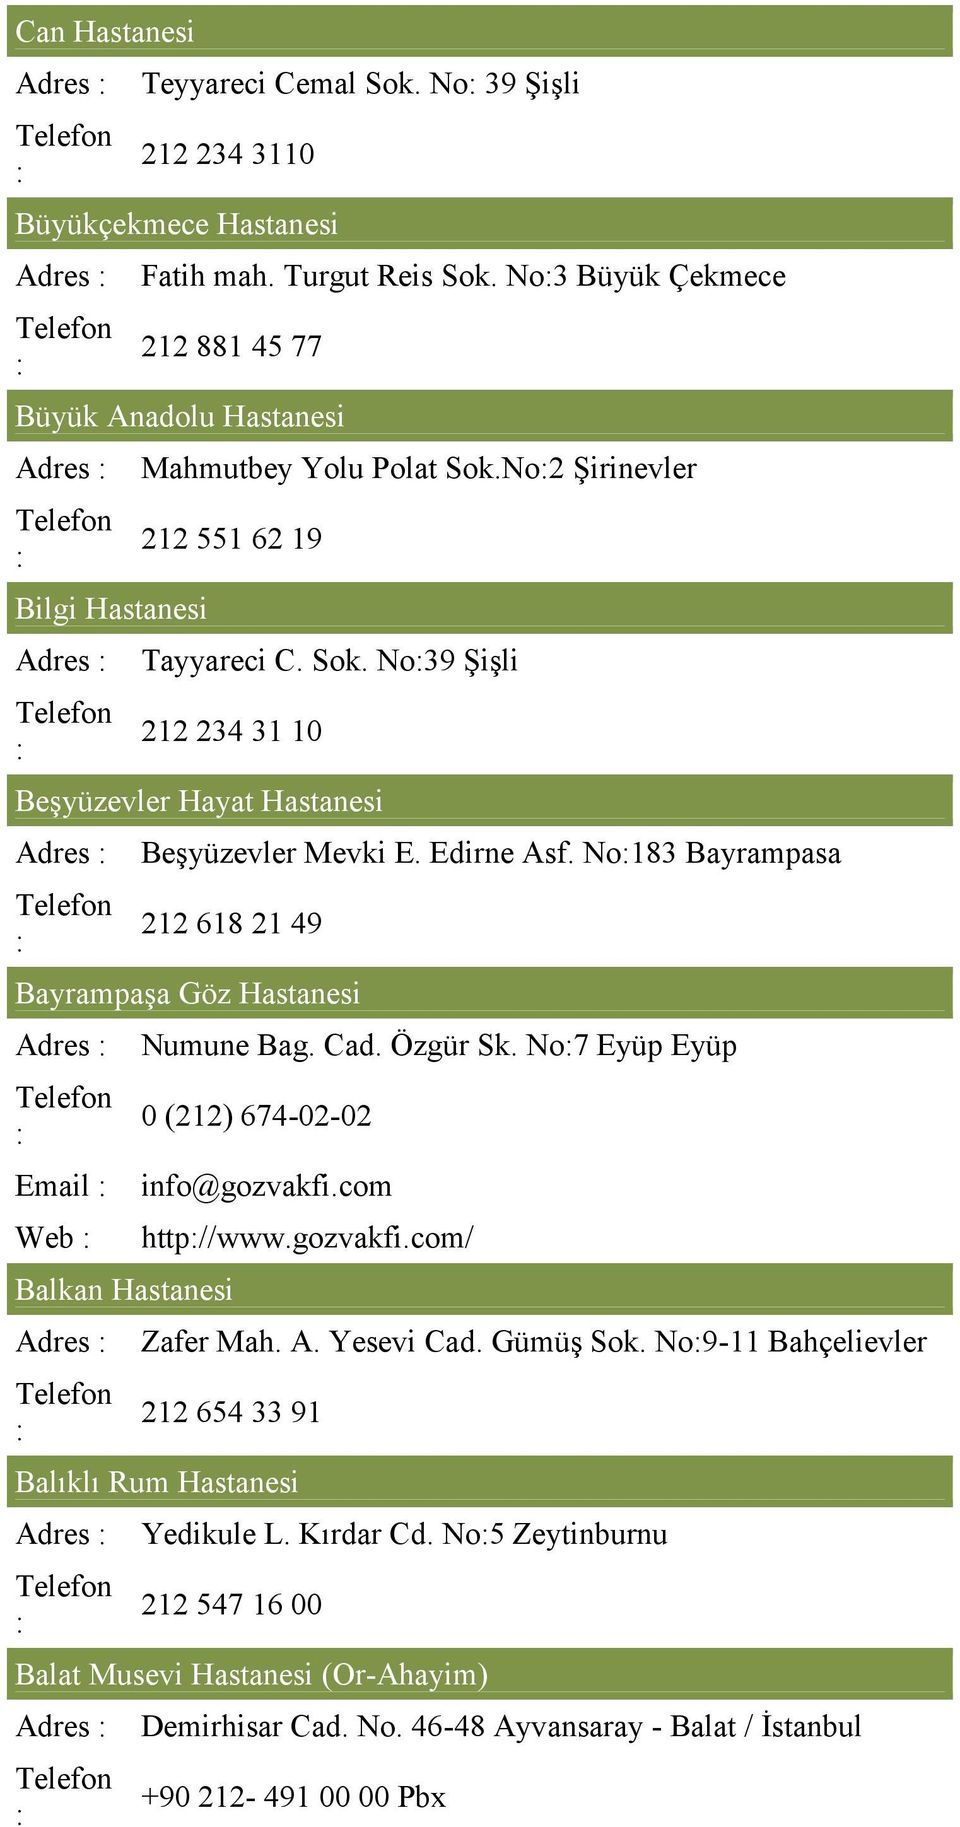 Edirne Asf. No183 Bayrampasa 212 618 21 49 Bayrampaşa Göz Hastanesi Adres Email Web Balkan Hastanesi Adres Numune Bag. Cad. Özgür Sk. No7 Eyüp Eyüp 0 (212) 674-02-02 info@gozvakfi.com http//www.